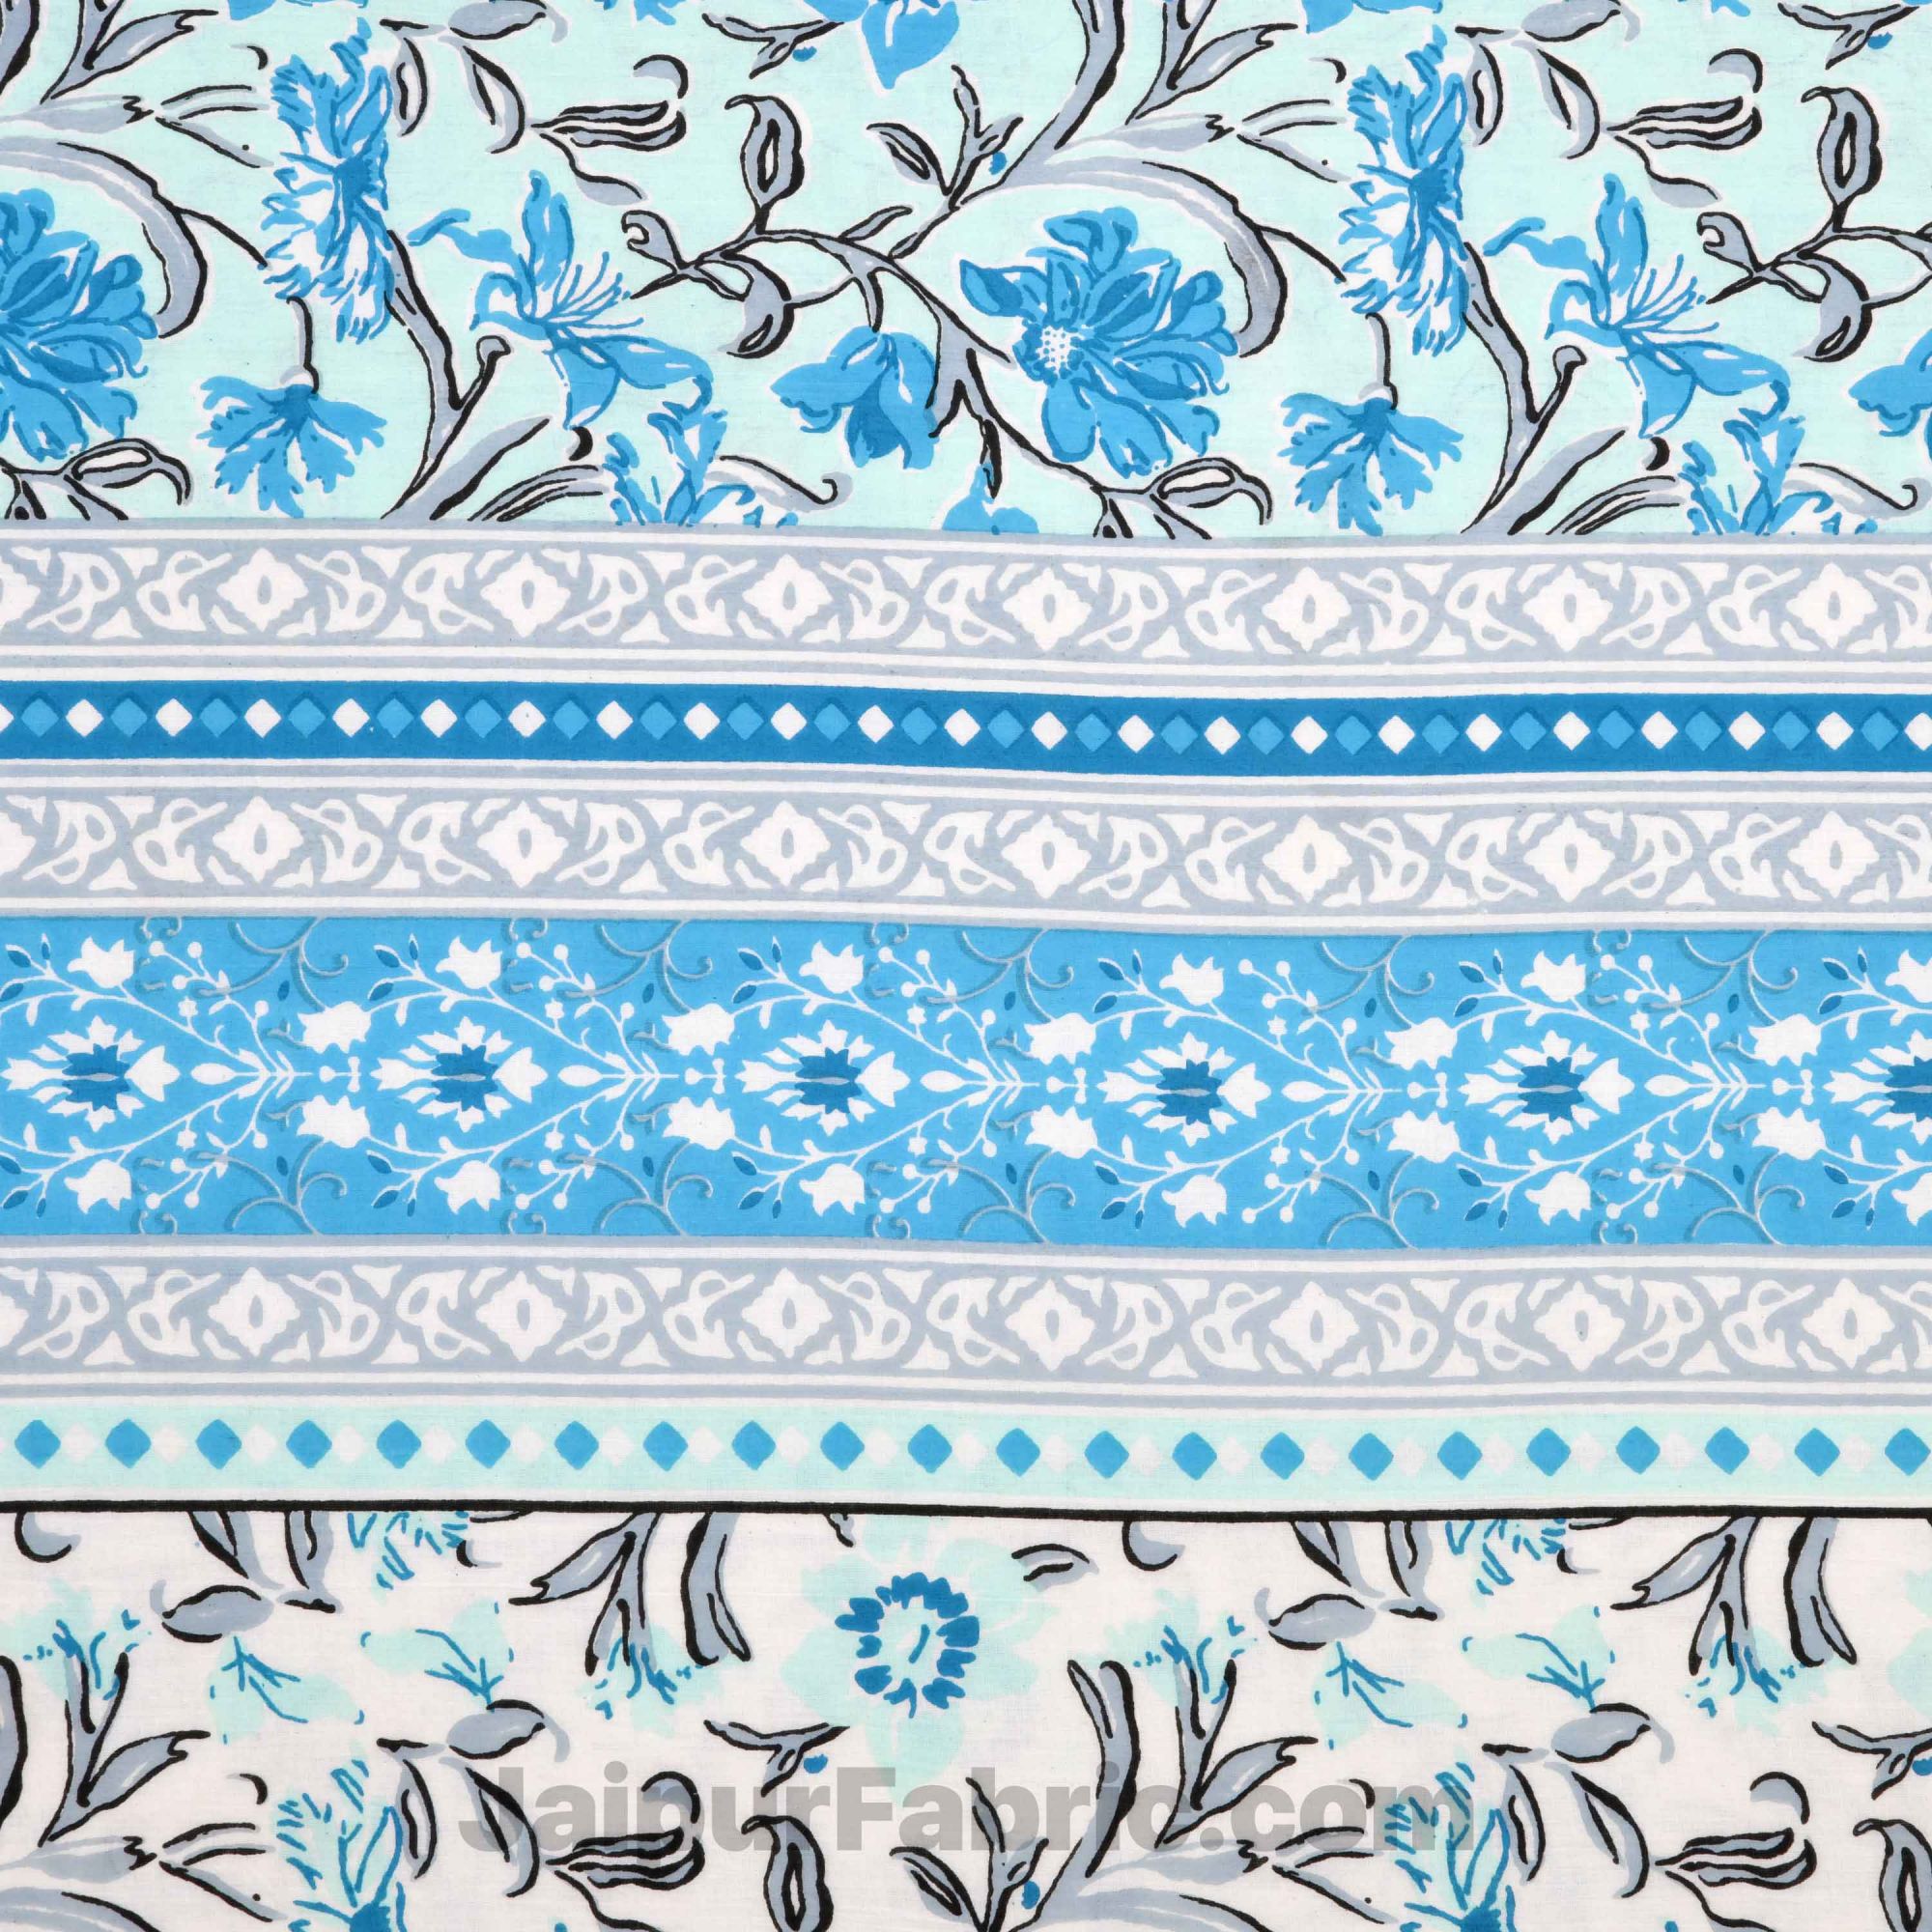 Lightweight Reversible Double Bed Dohar Blue Leaves FlowerSkin Friendly Pure Cotton MulMul Blanket / AC Comforter / Summer Quilt